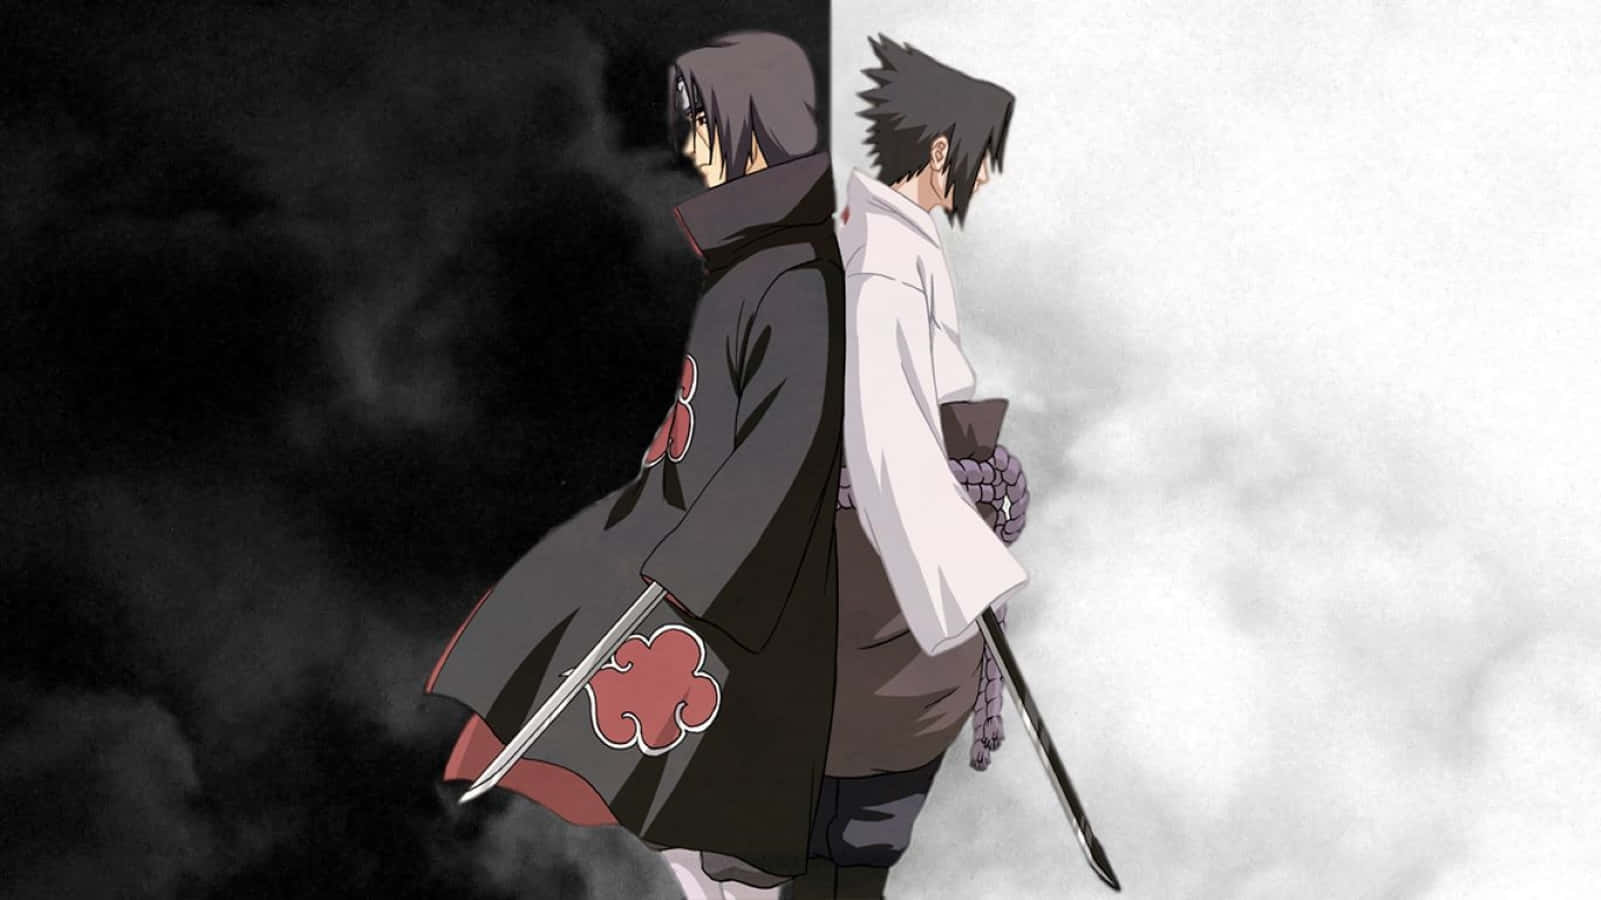 Akatsuki Sasuke, the protagonist of Naruto Wallpaper